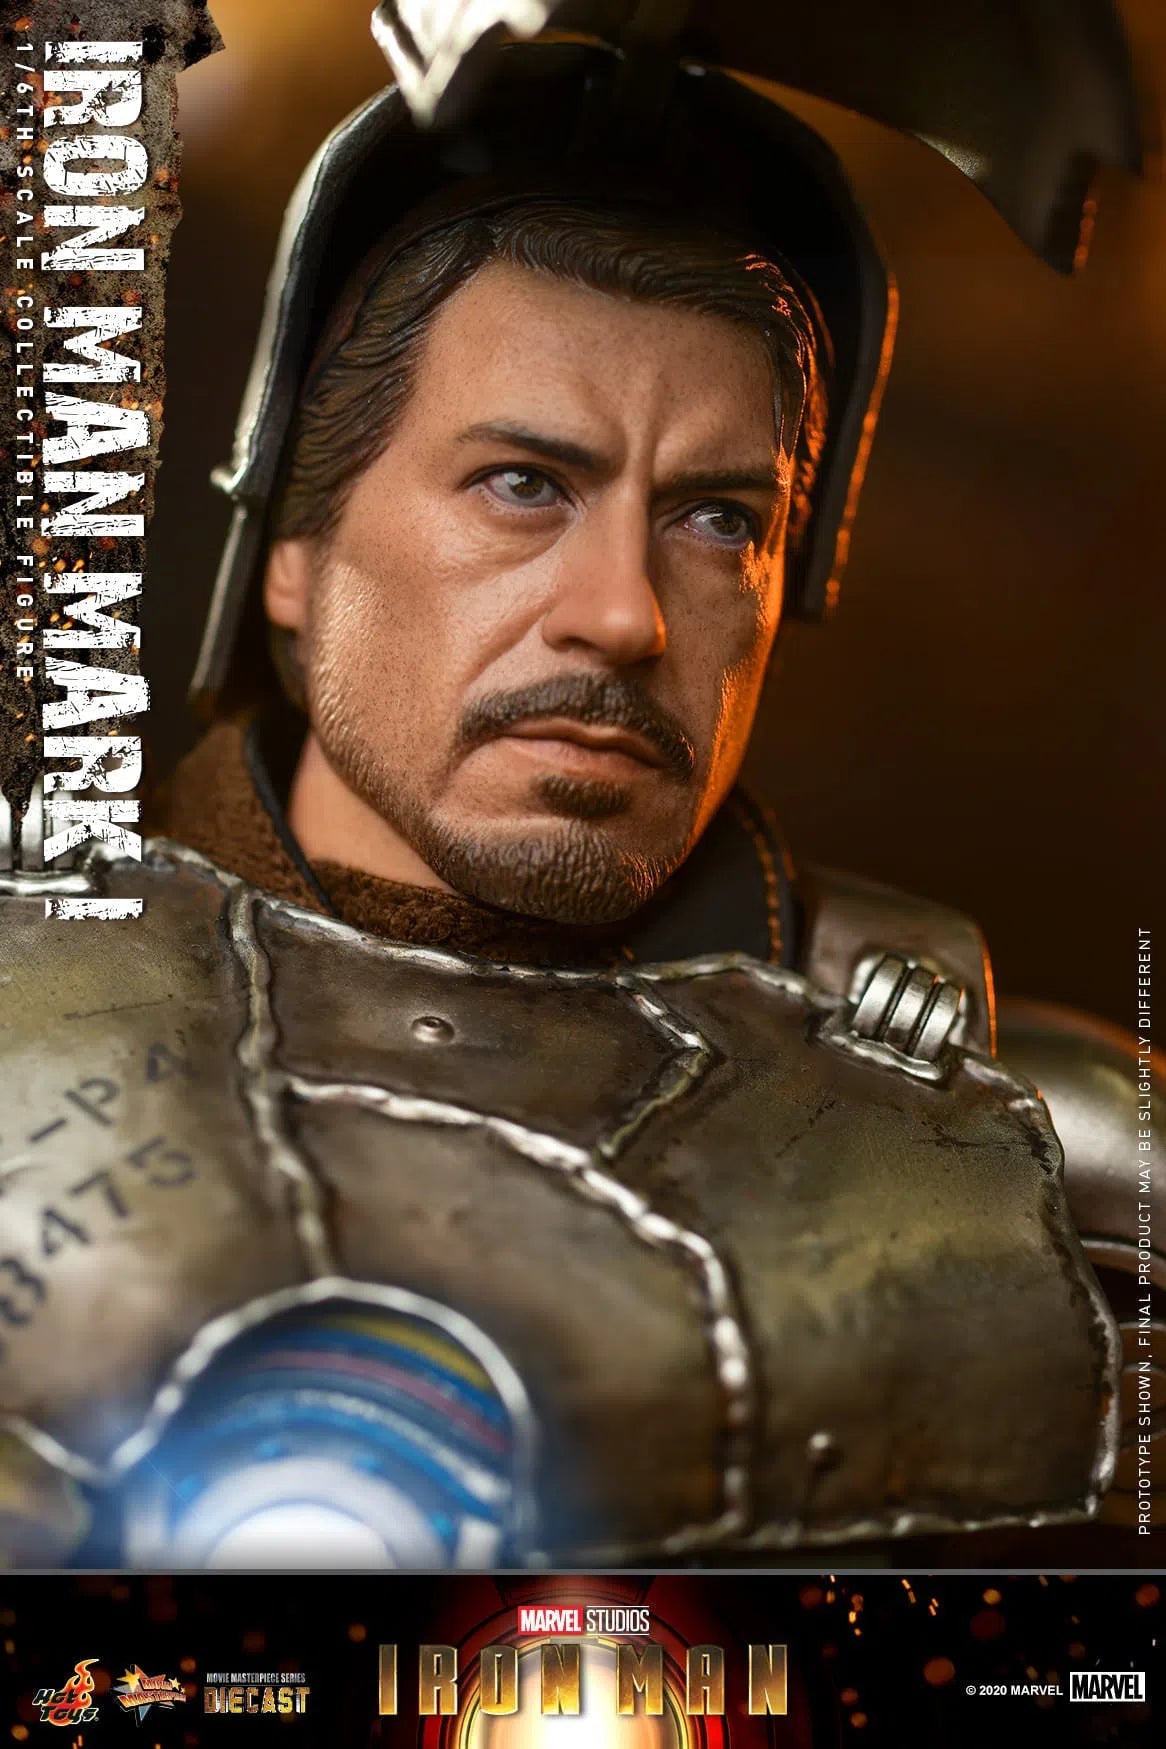 Iron Man: MK1: Iron Man 1: Diecast: Marvel: MMS605D40: Hot Toys